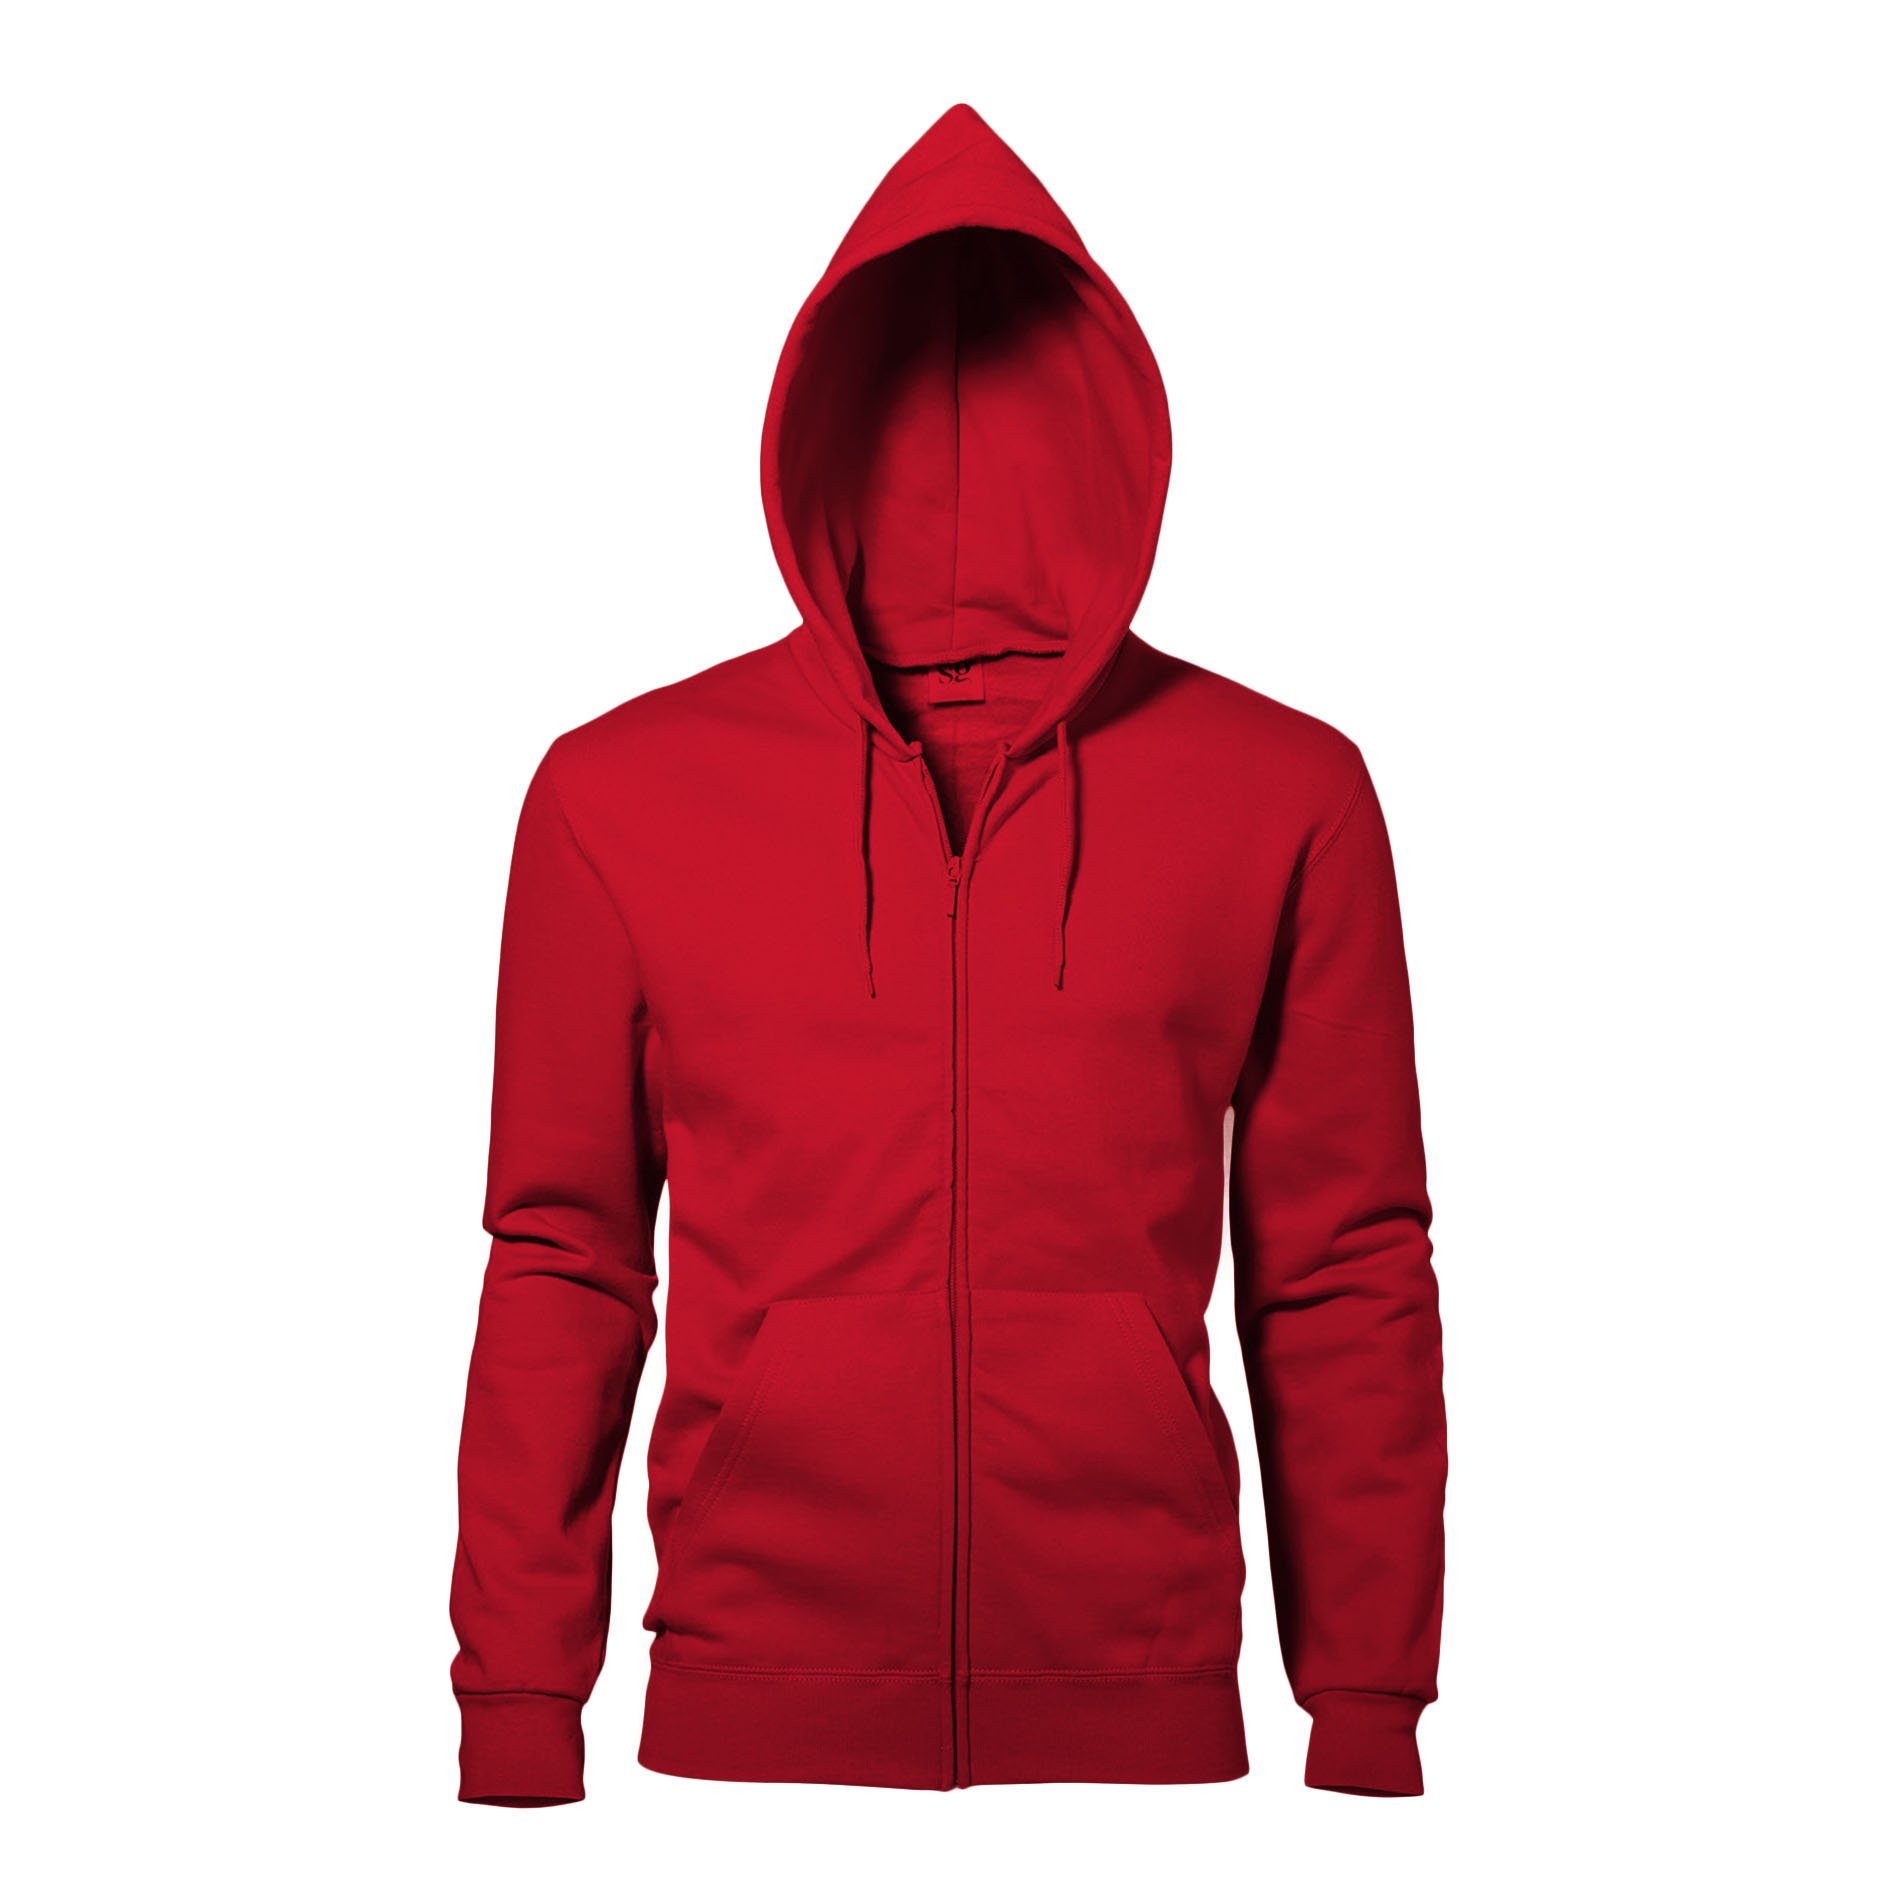 SG Clothing Full Zip SG29 - SG29F - SG29K hoodie | Hoodies | Clothing